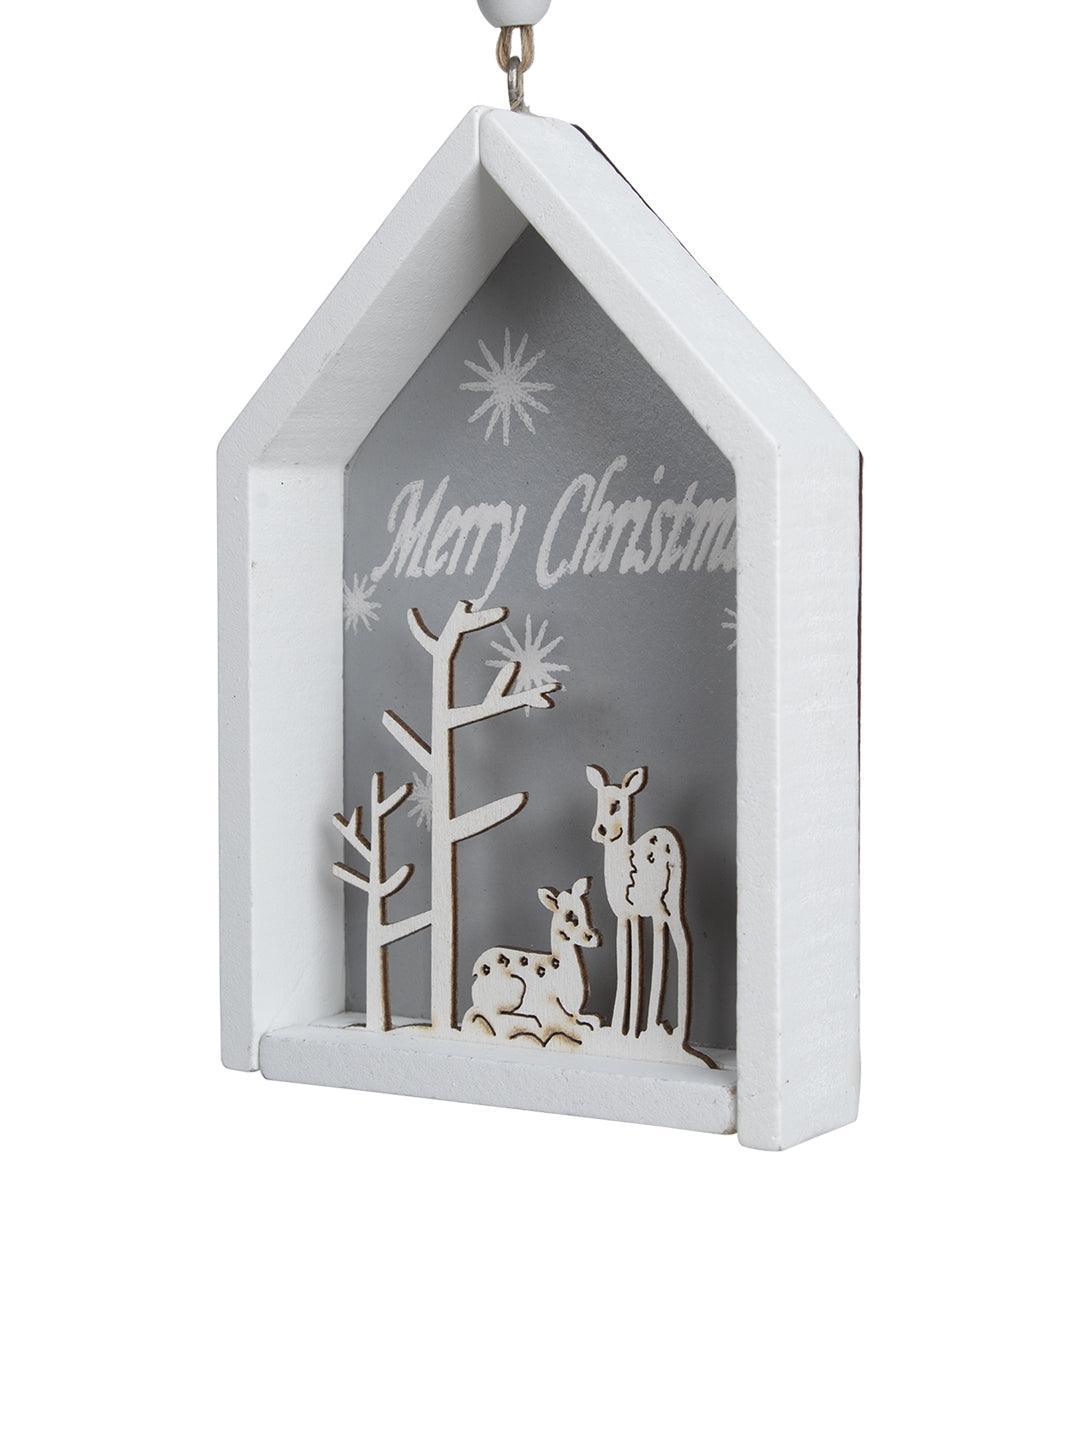 House Design - "Merry Christmas" Hanging Plaque Set Of 2 Pcs - MARKET 99